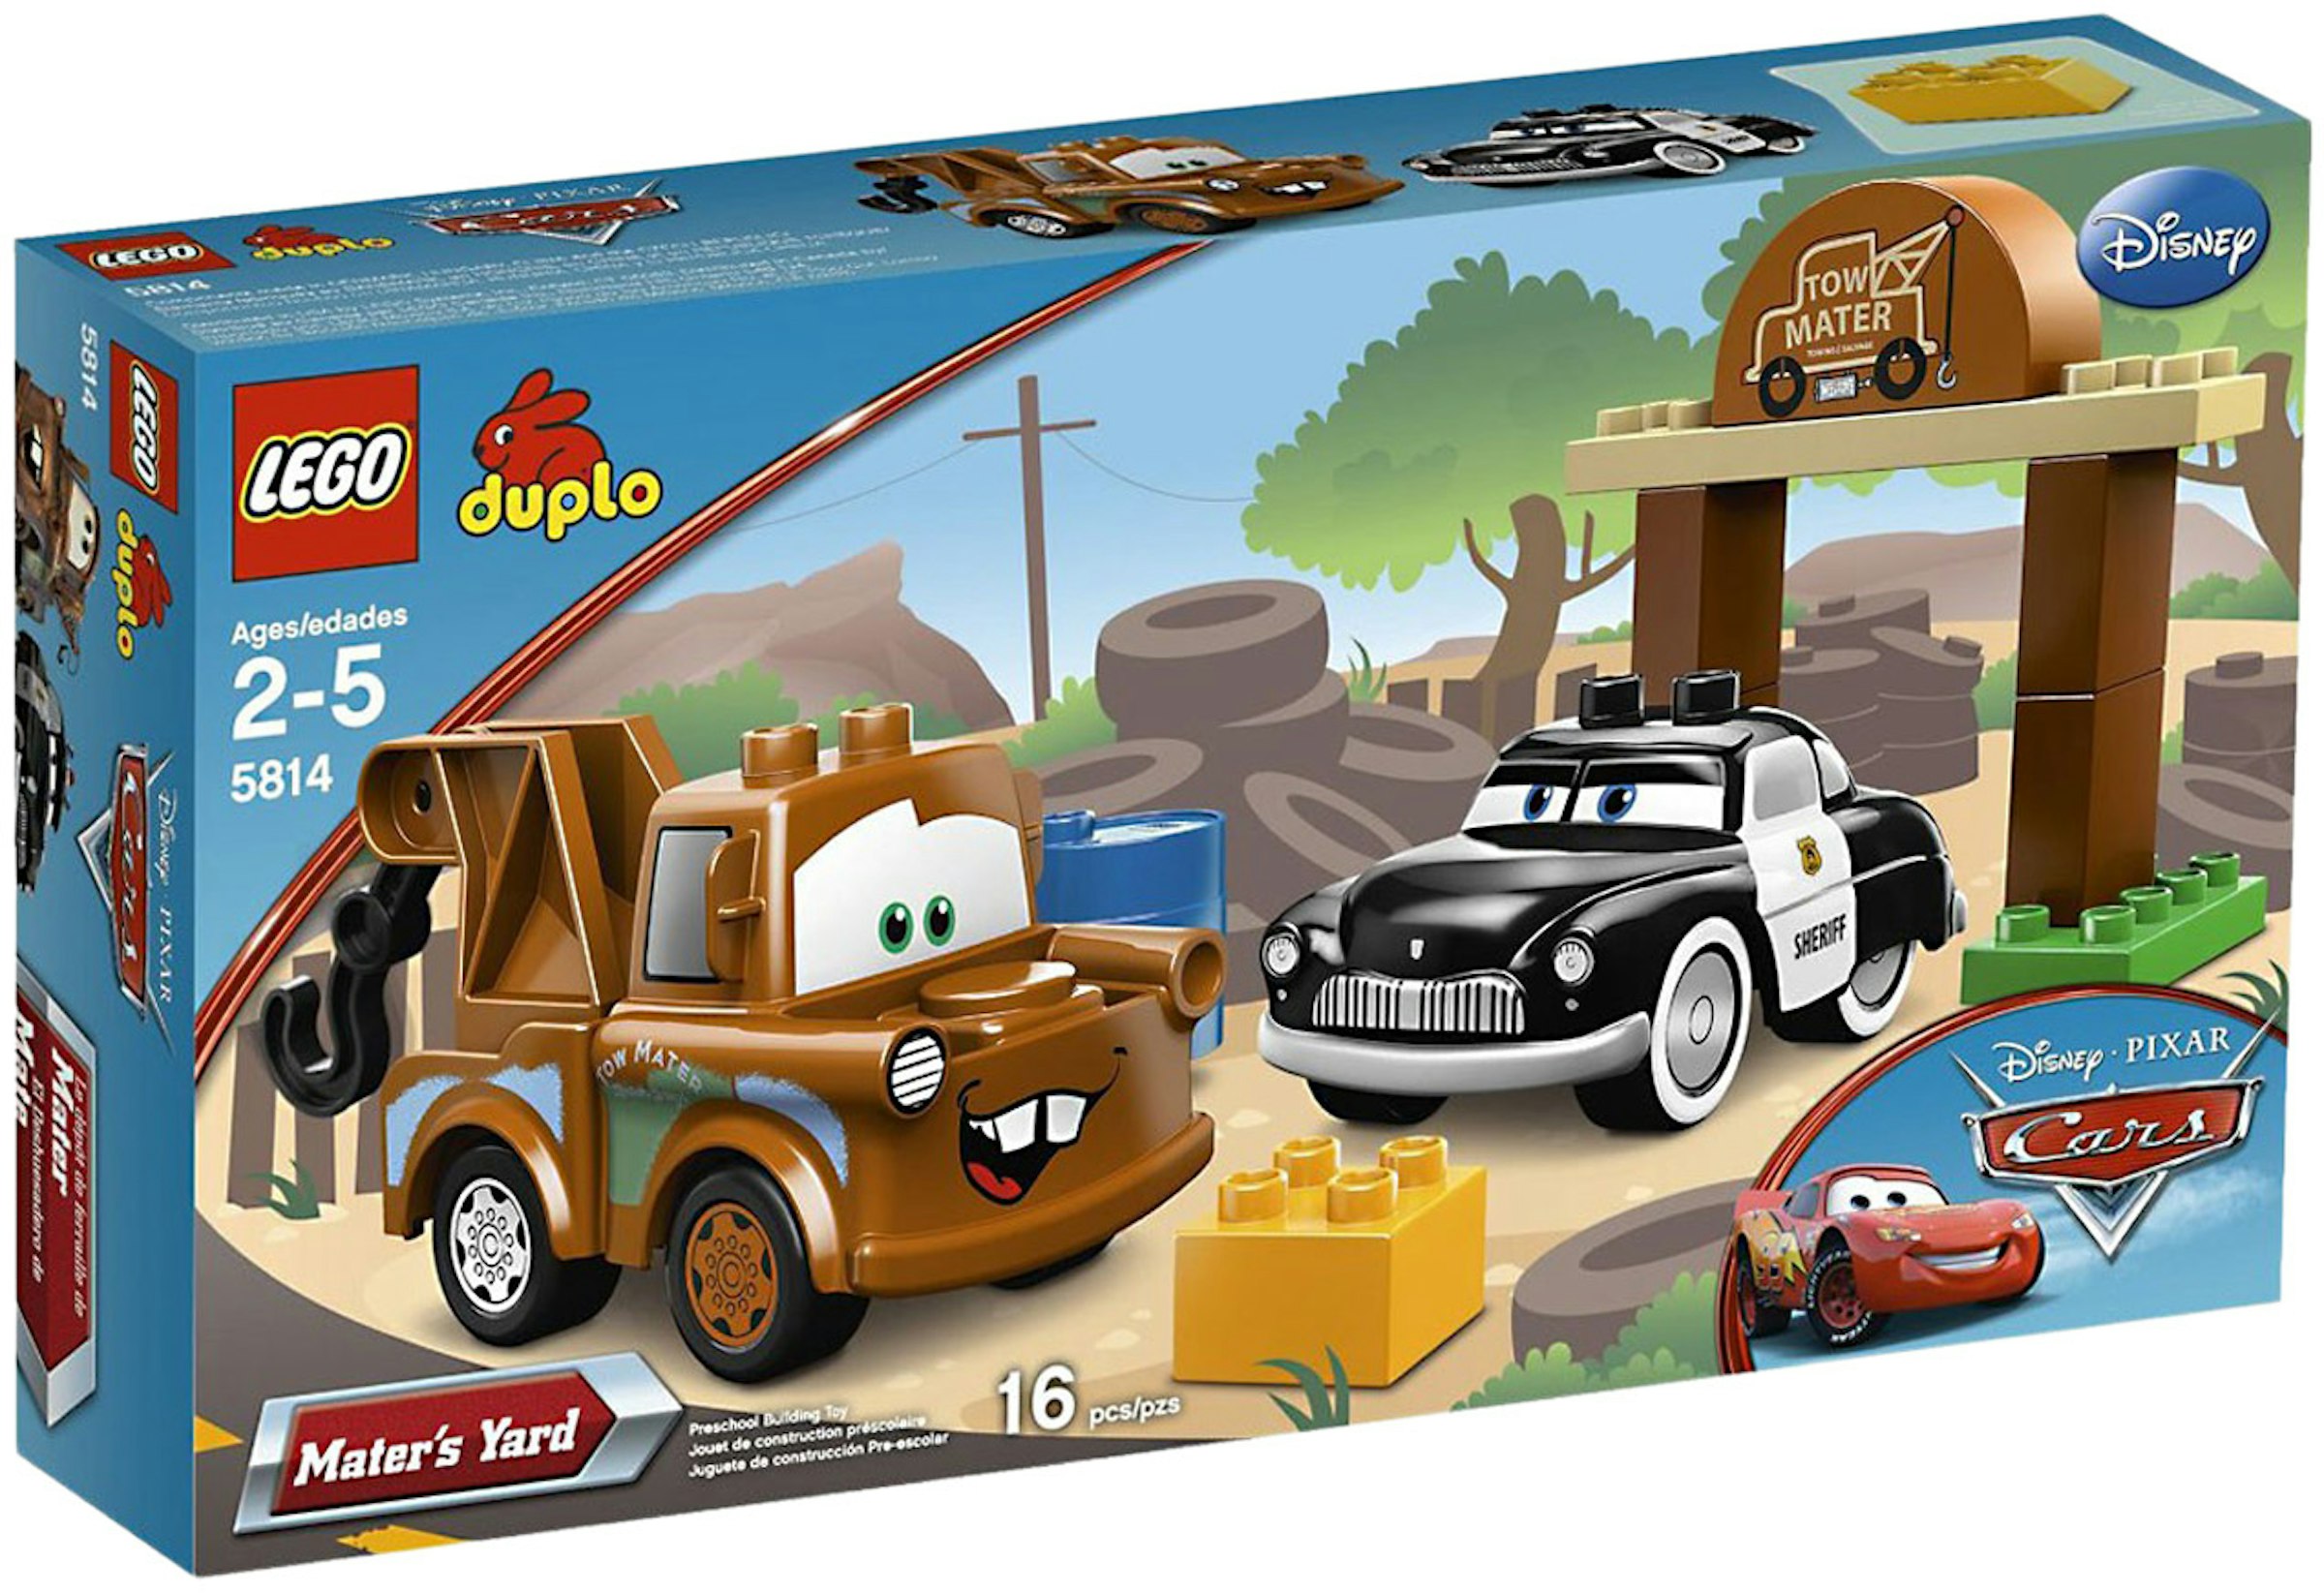 LEGO Disney/Pixar Cars Duplo Mater's Yard Set 5814 -